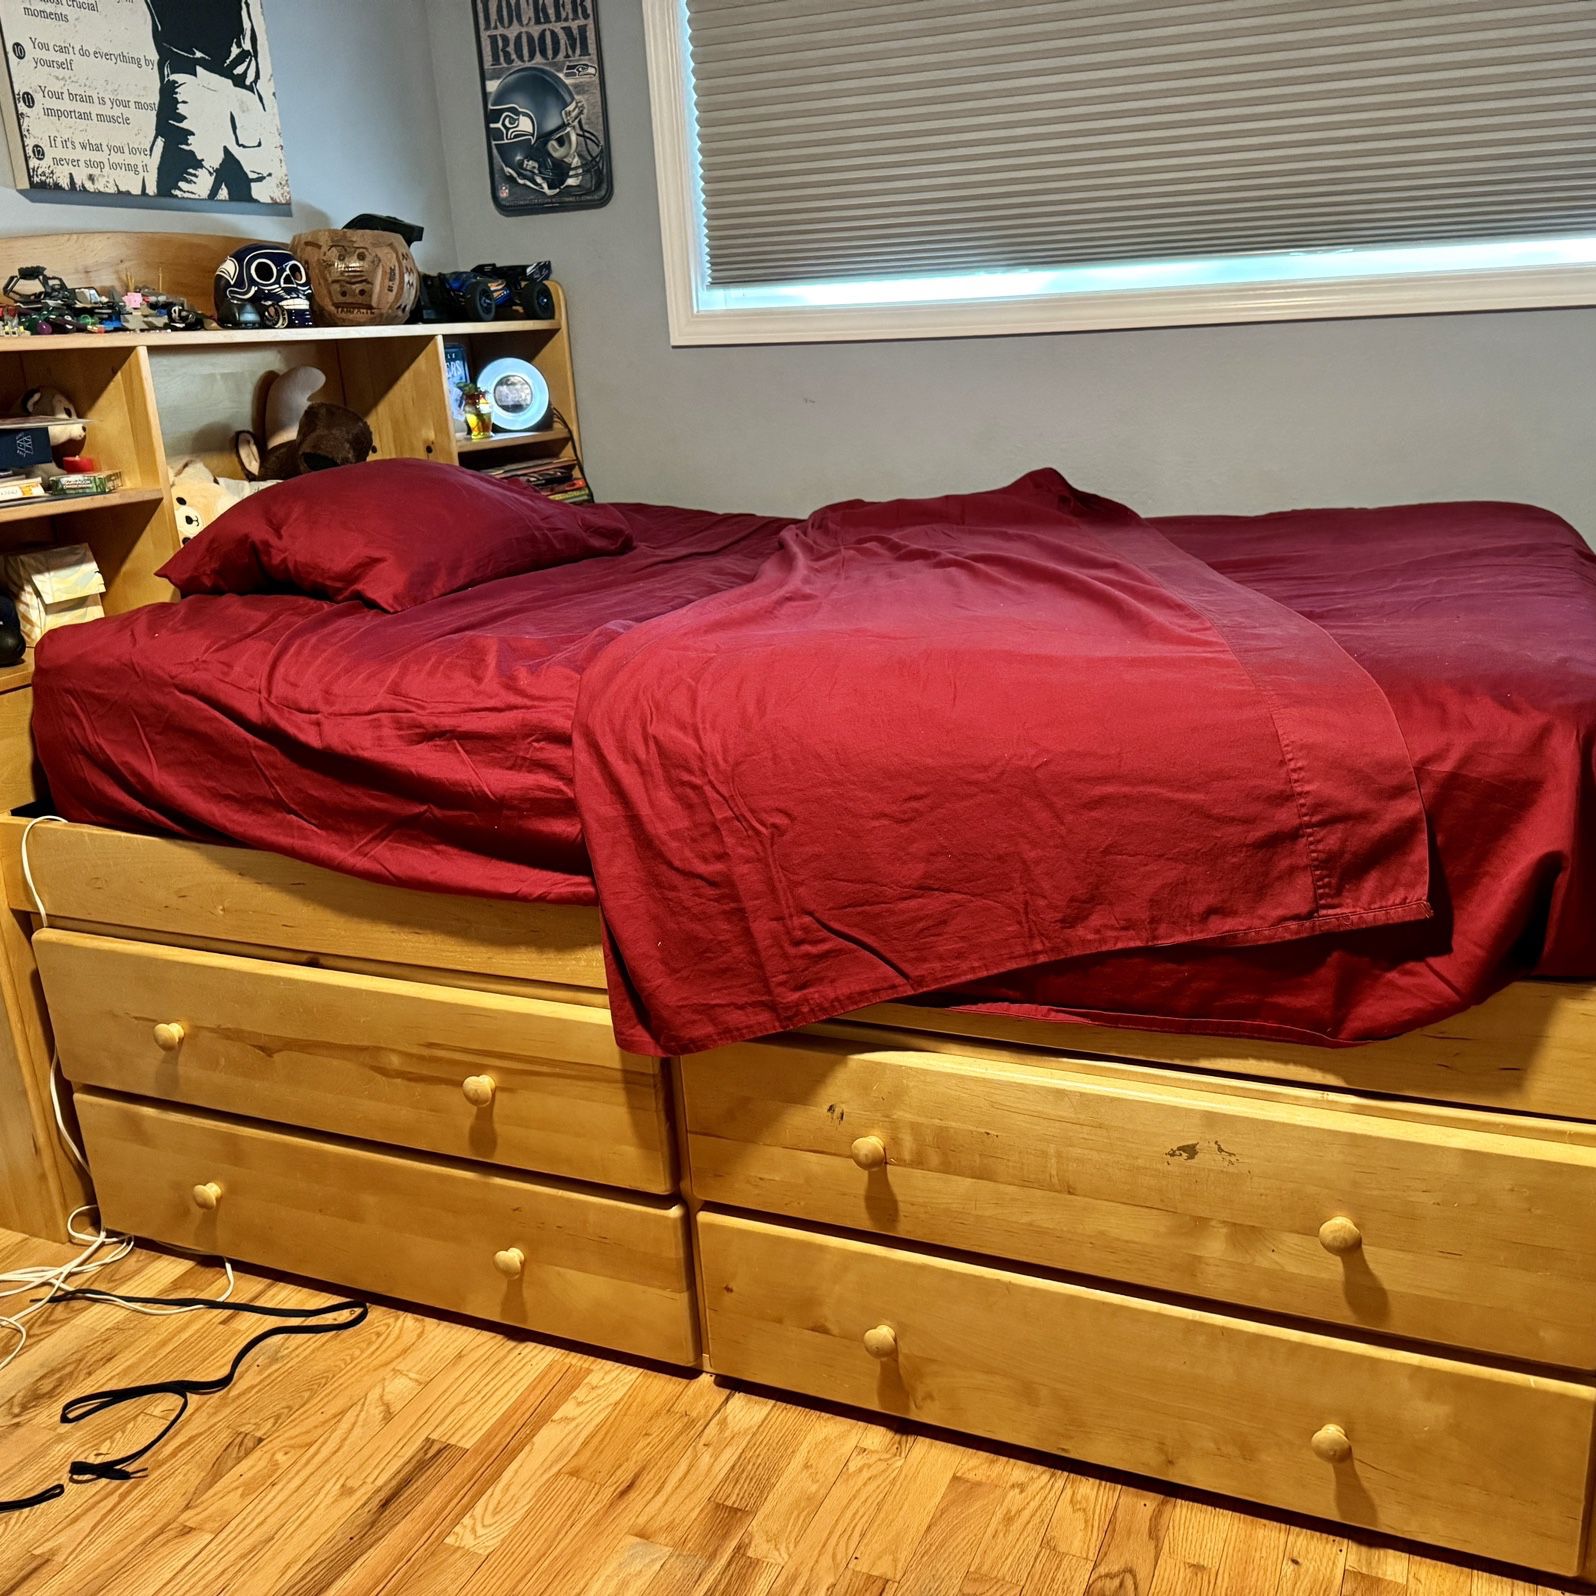 Full Size  mattress, heated waterproof Mattress pad, 2 Sets Amazon sheets, 1 pillow! (Bed Frame Sold)